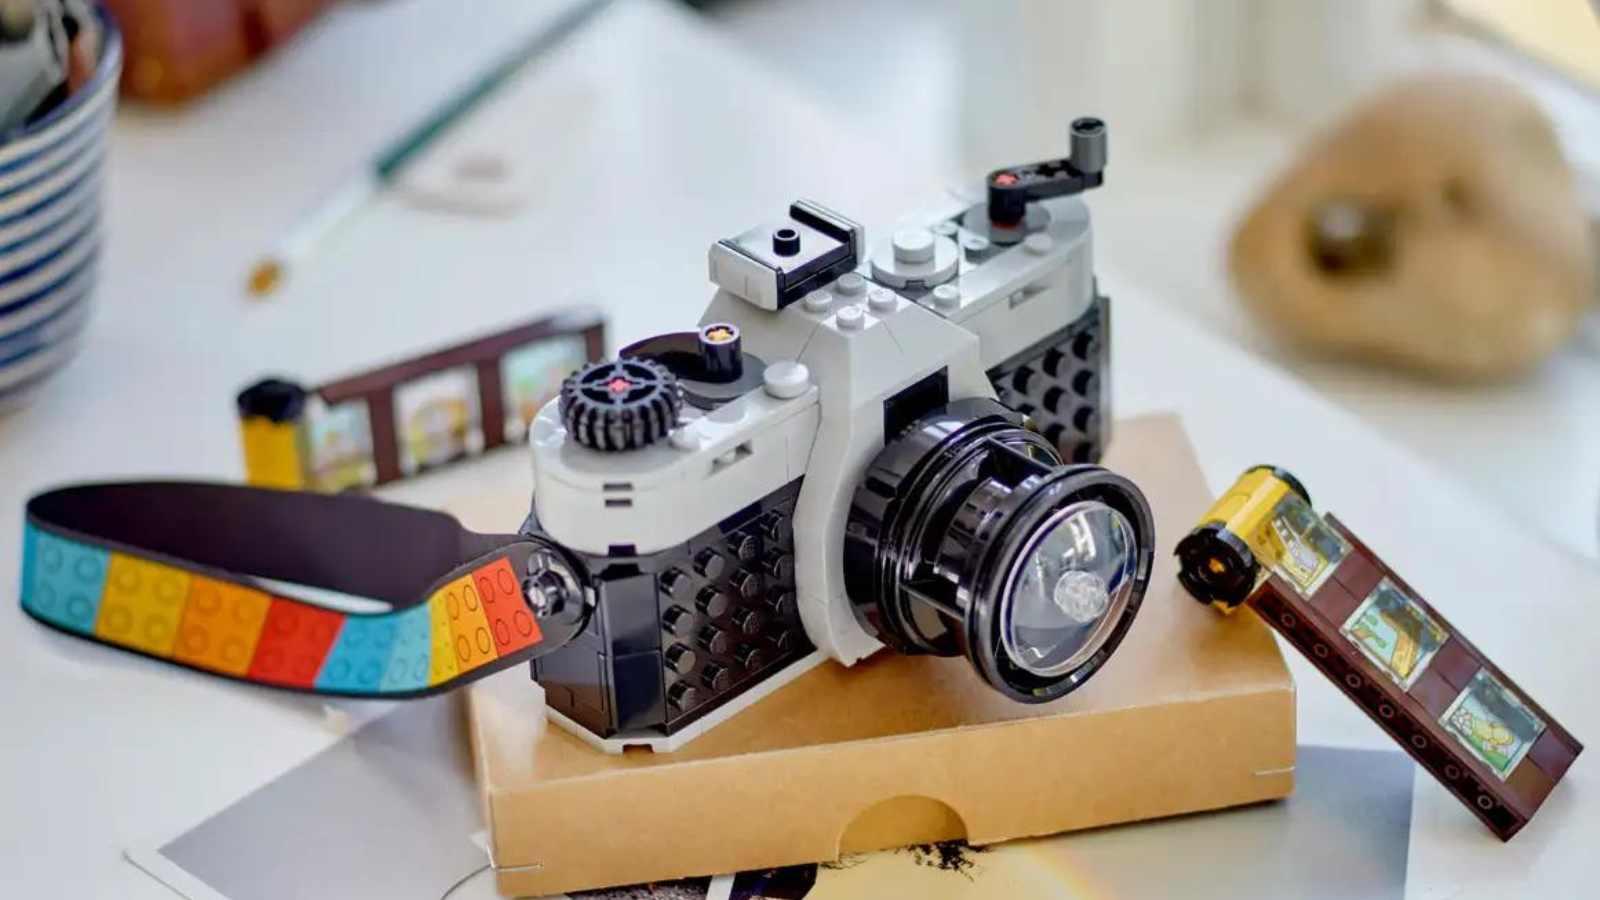 The LEGO-reimagined Retro Camera on display